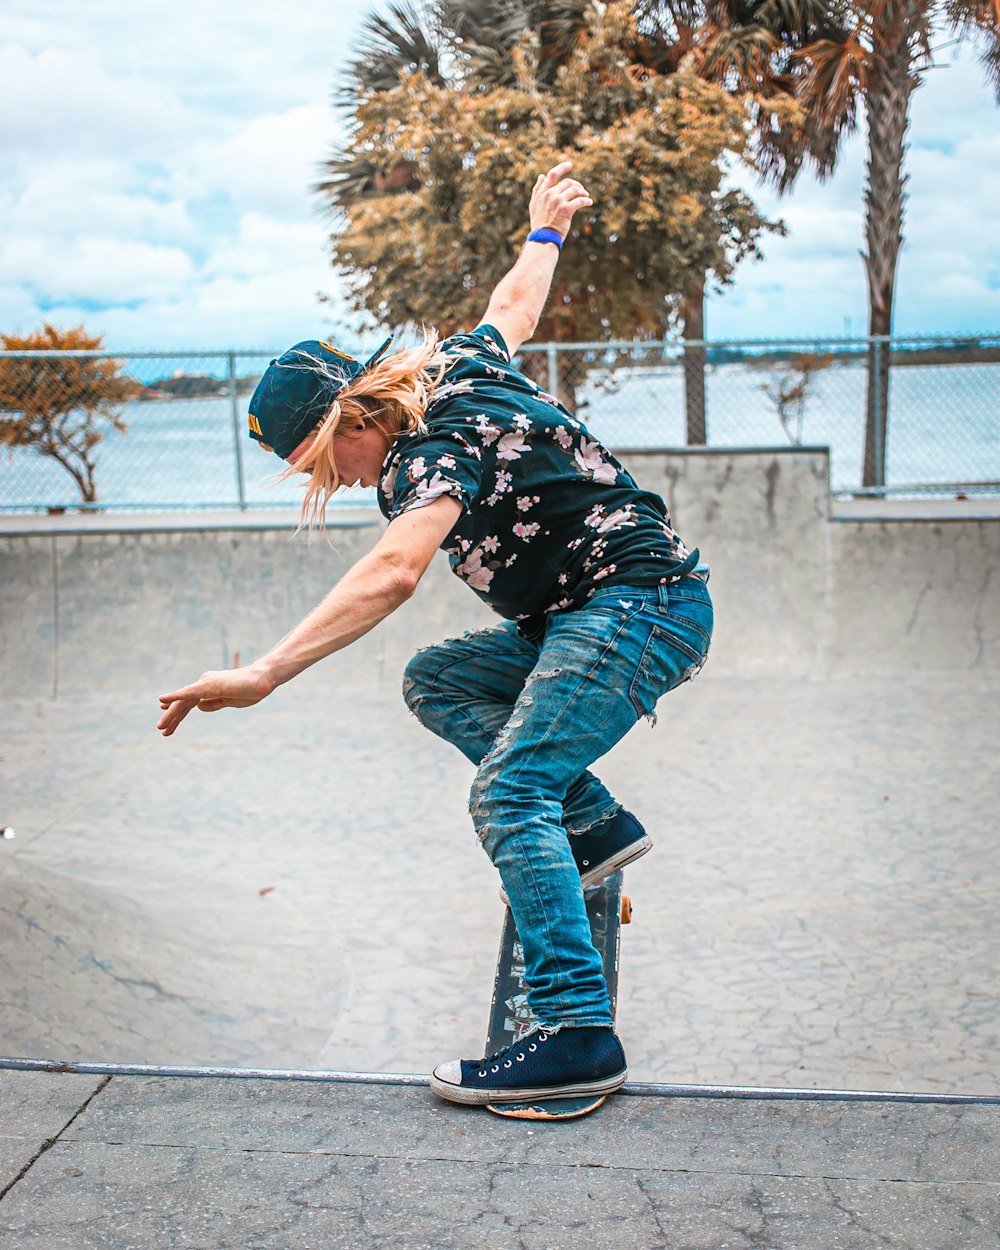 skateboarder che fa acrobazie